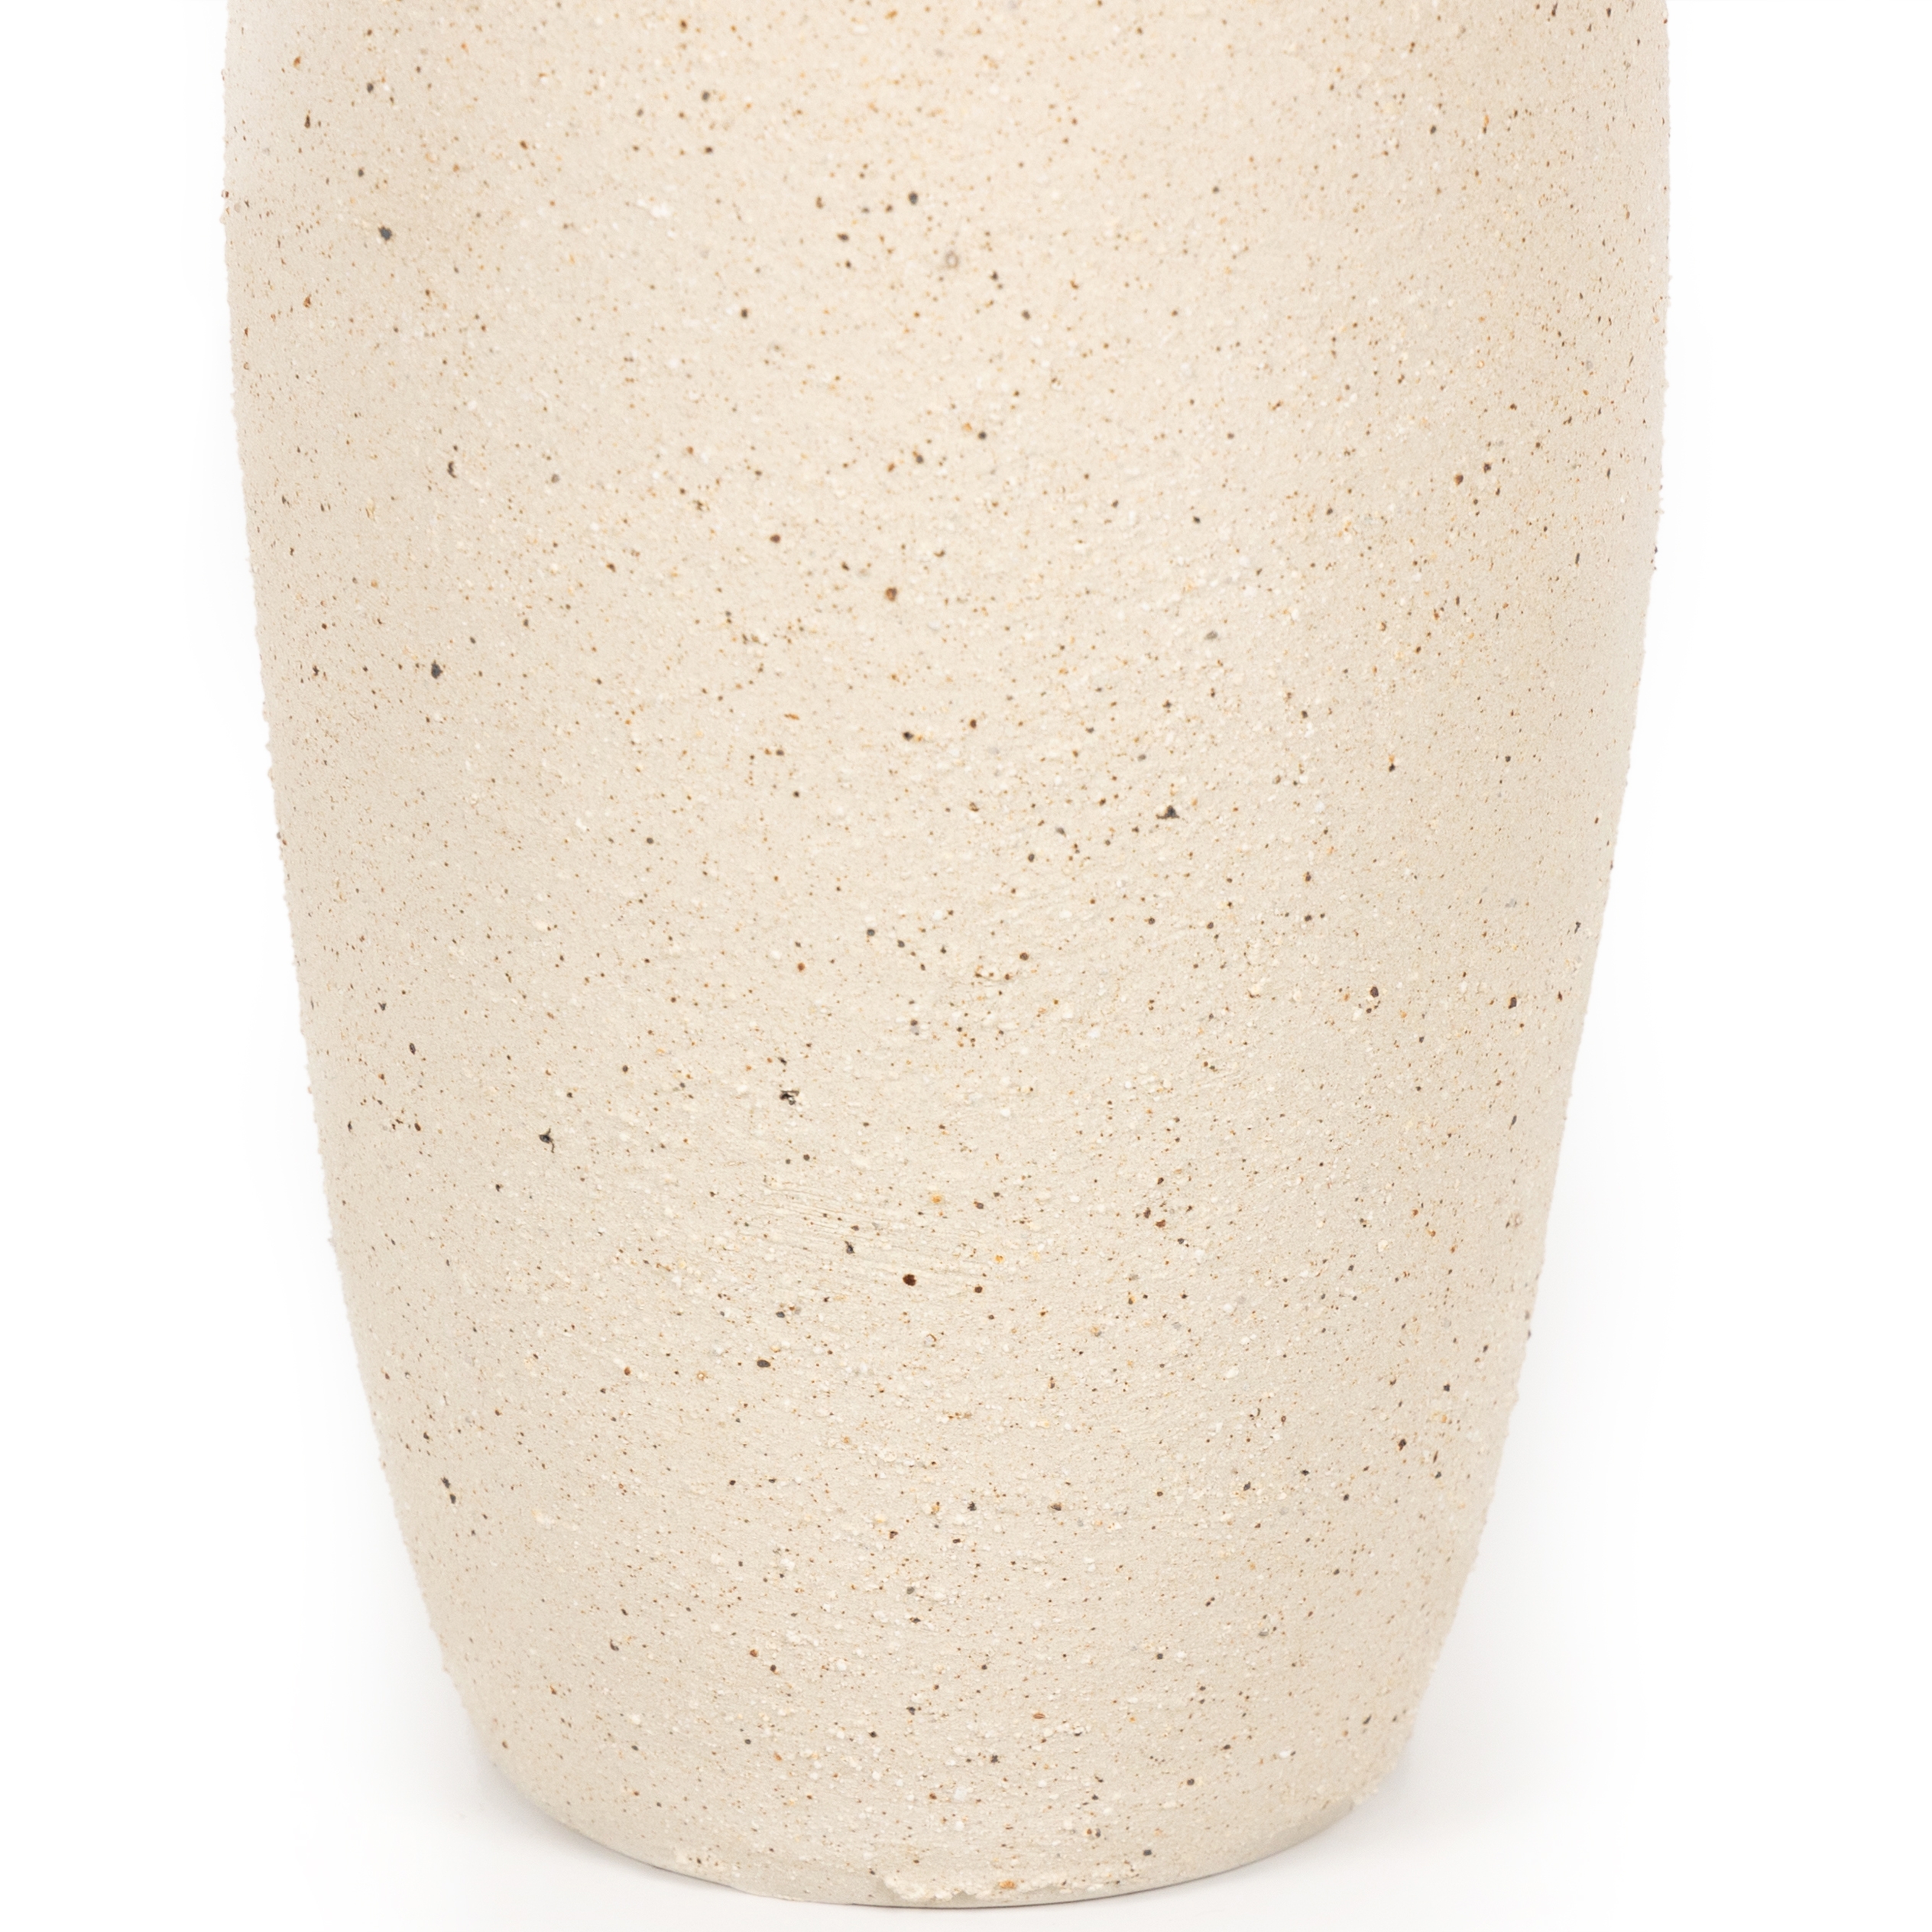 Izan Tall Vase-Natural Grog Ceramic - Image 5